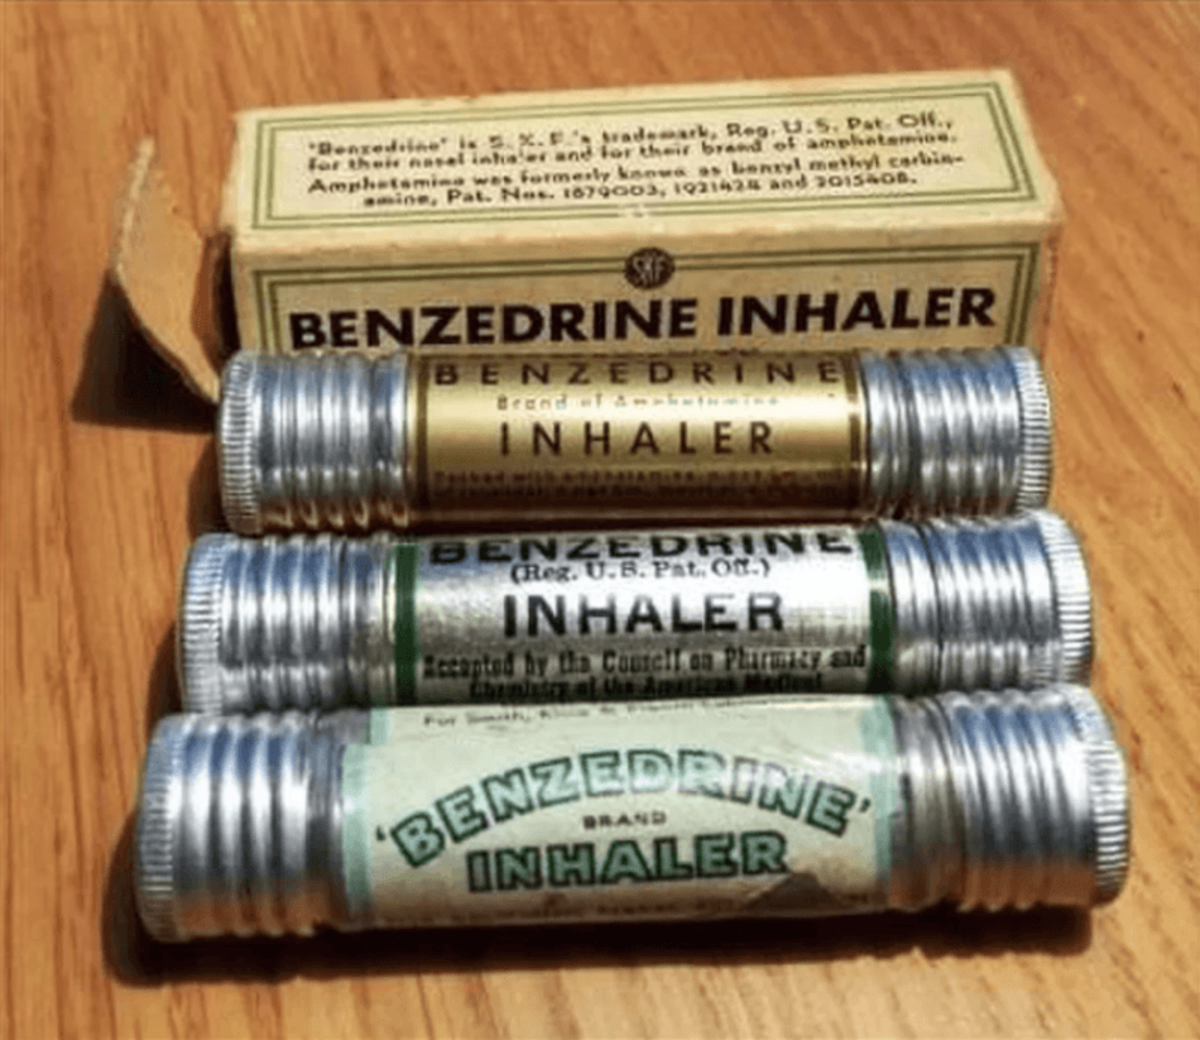 In the 1930s, amphetamine was sold in an inhaler under the name Benzedrine.